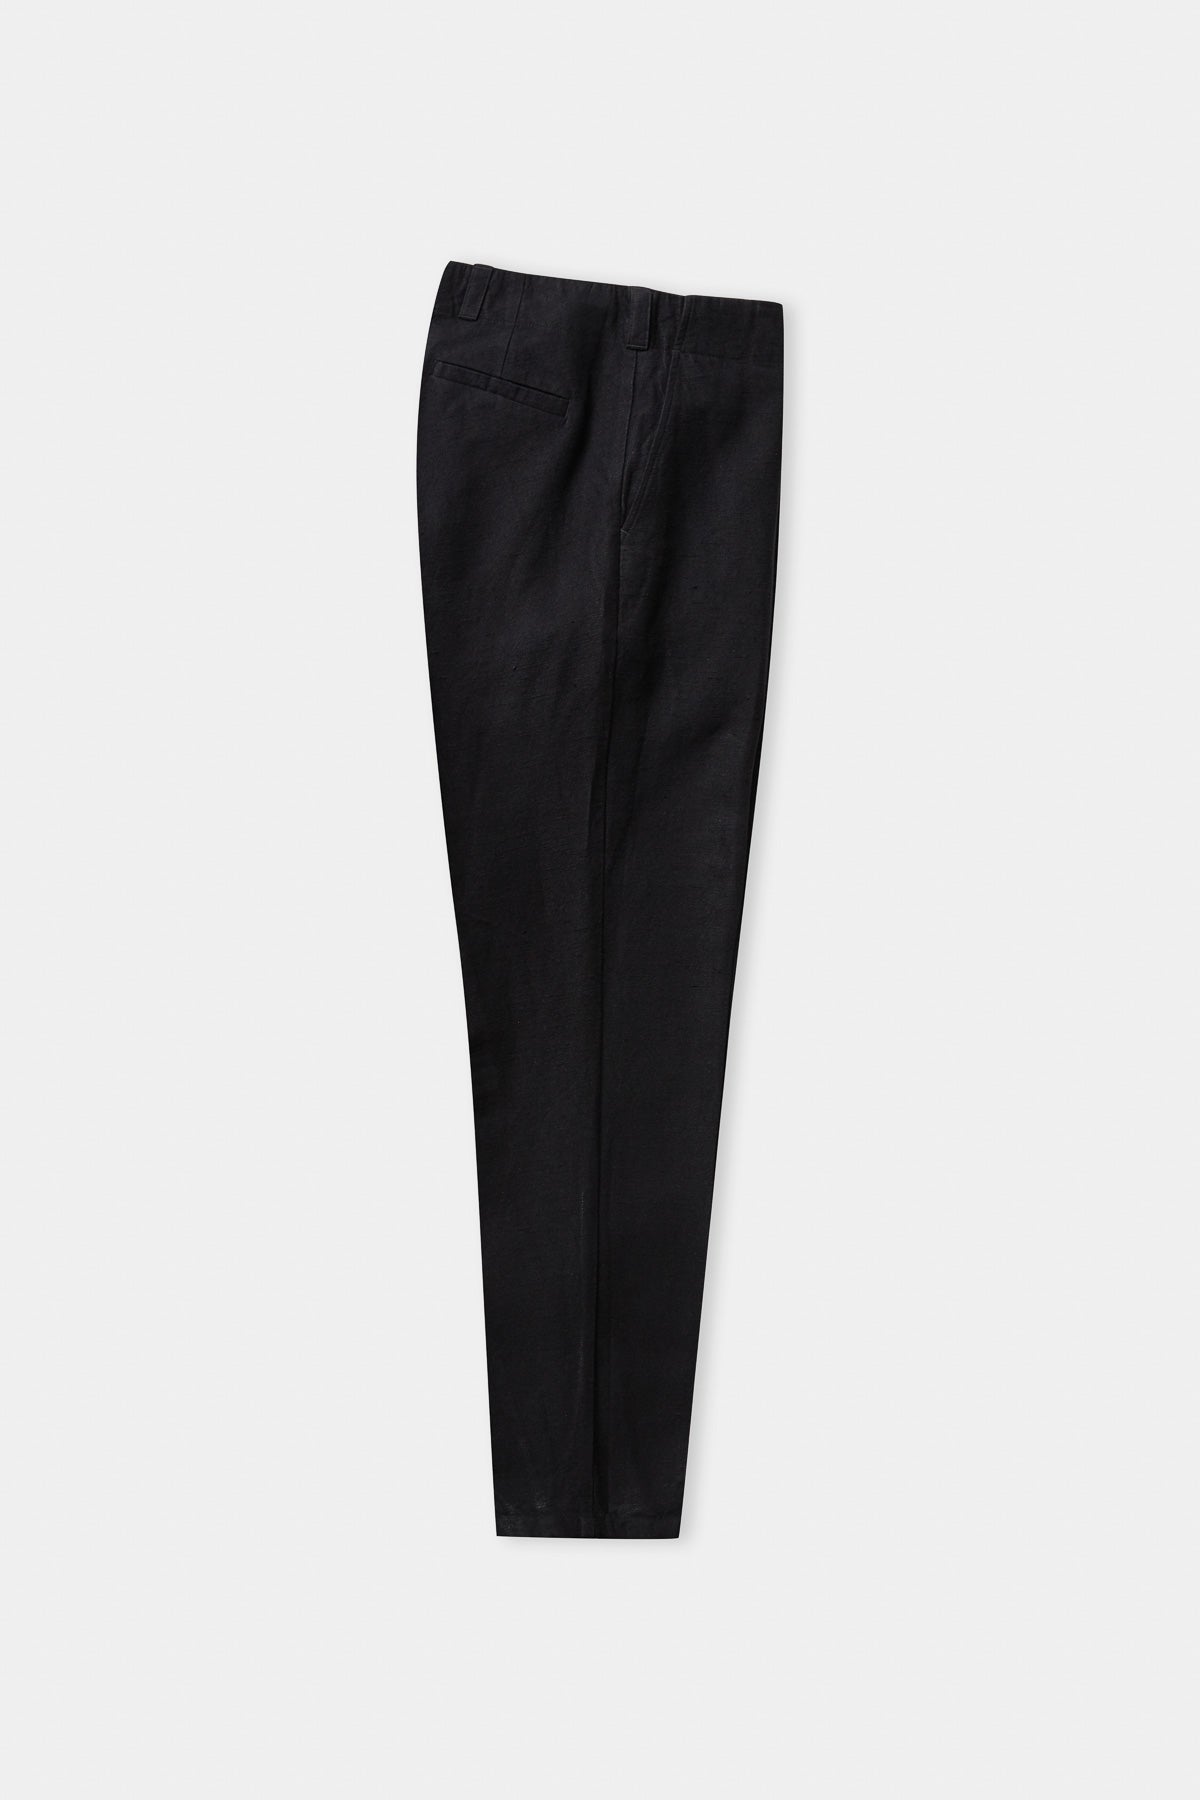 JOSTHA trousers black winter linen